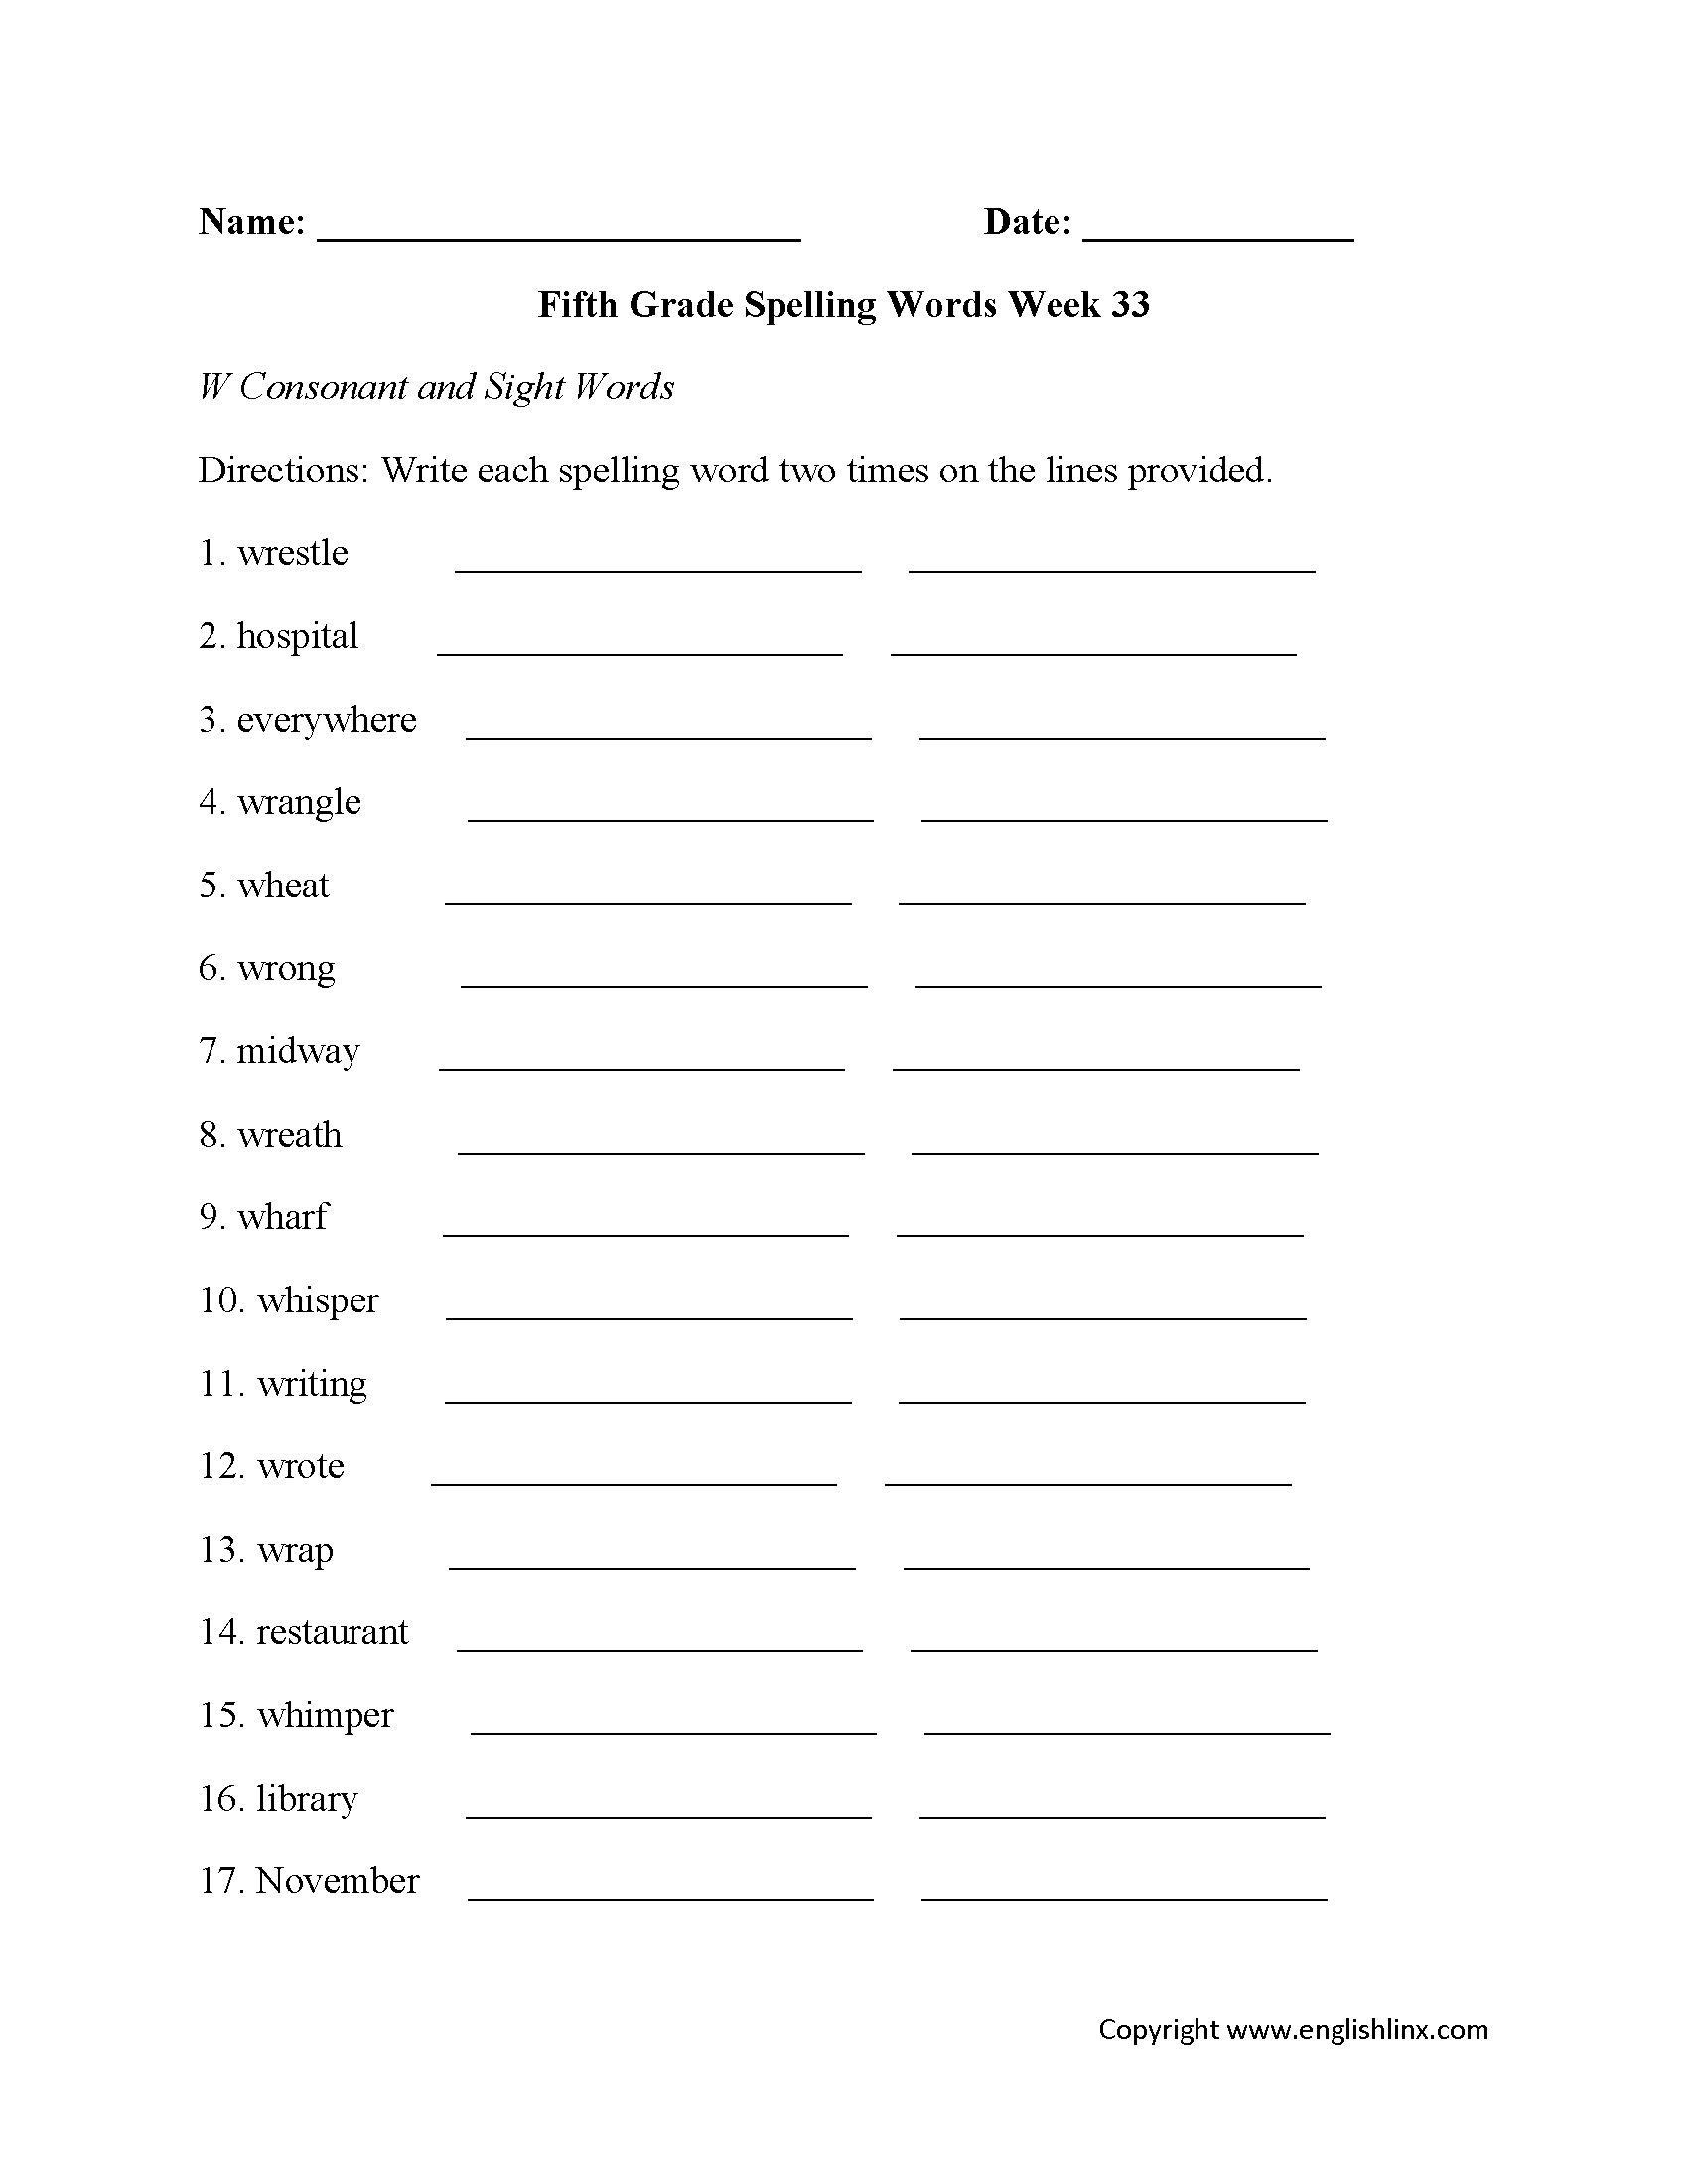 Fifth Grade Spelling Worksheets